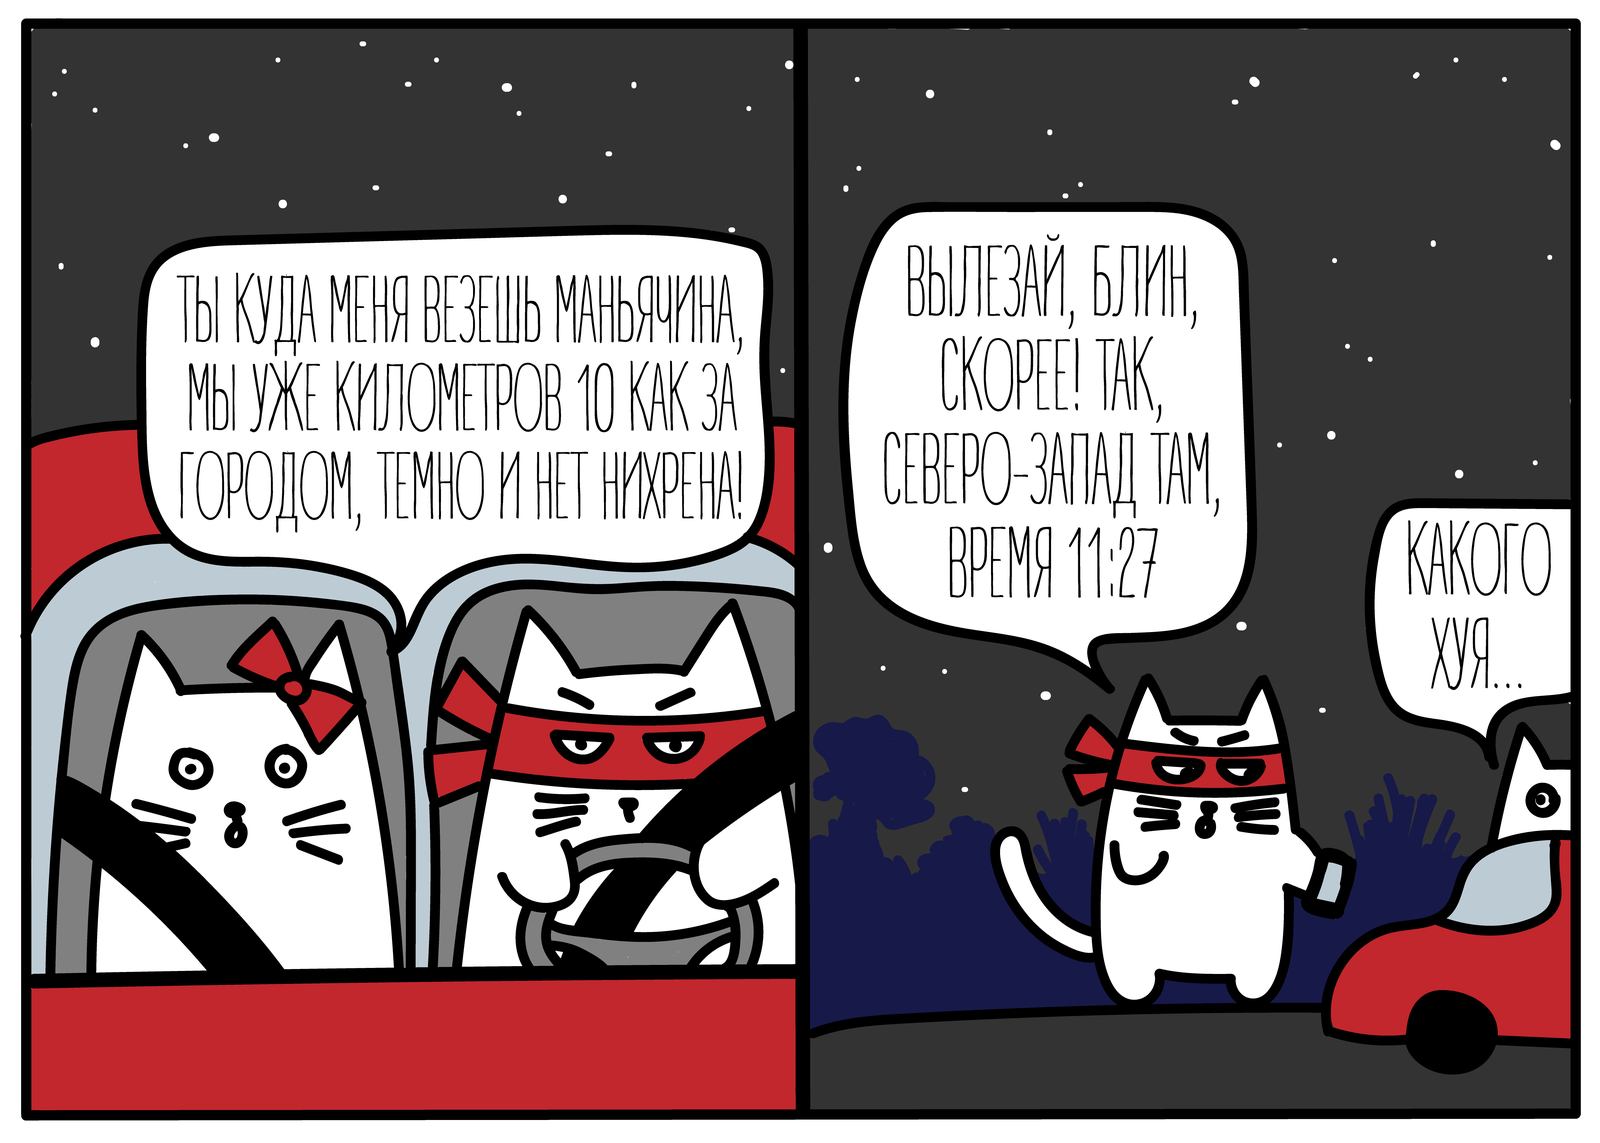 ISS - cat, Longpost, Illustrations, Space, Comics, My